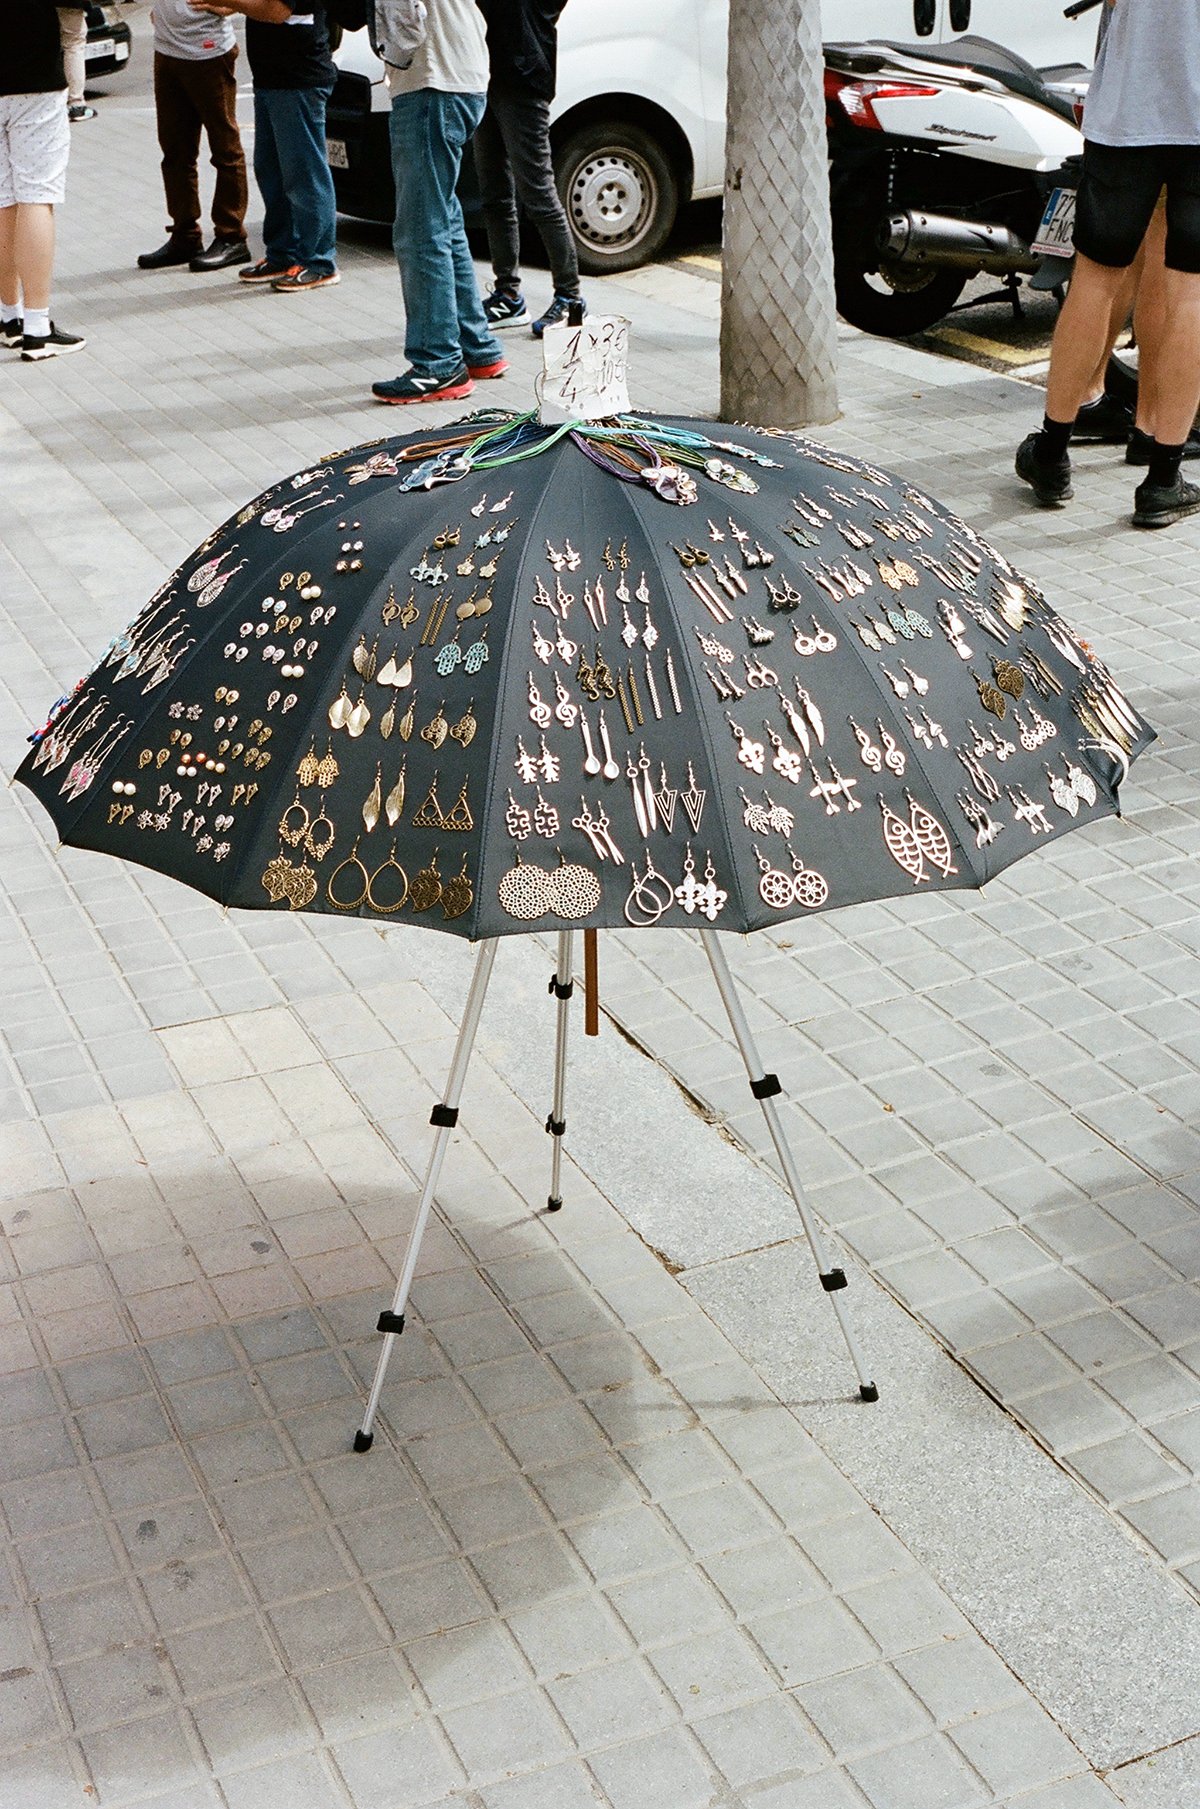 umbrellamerchdisplayweb.jpg